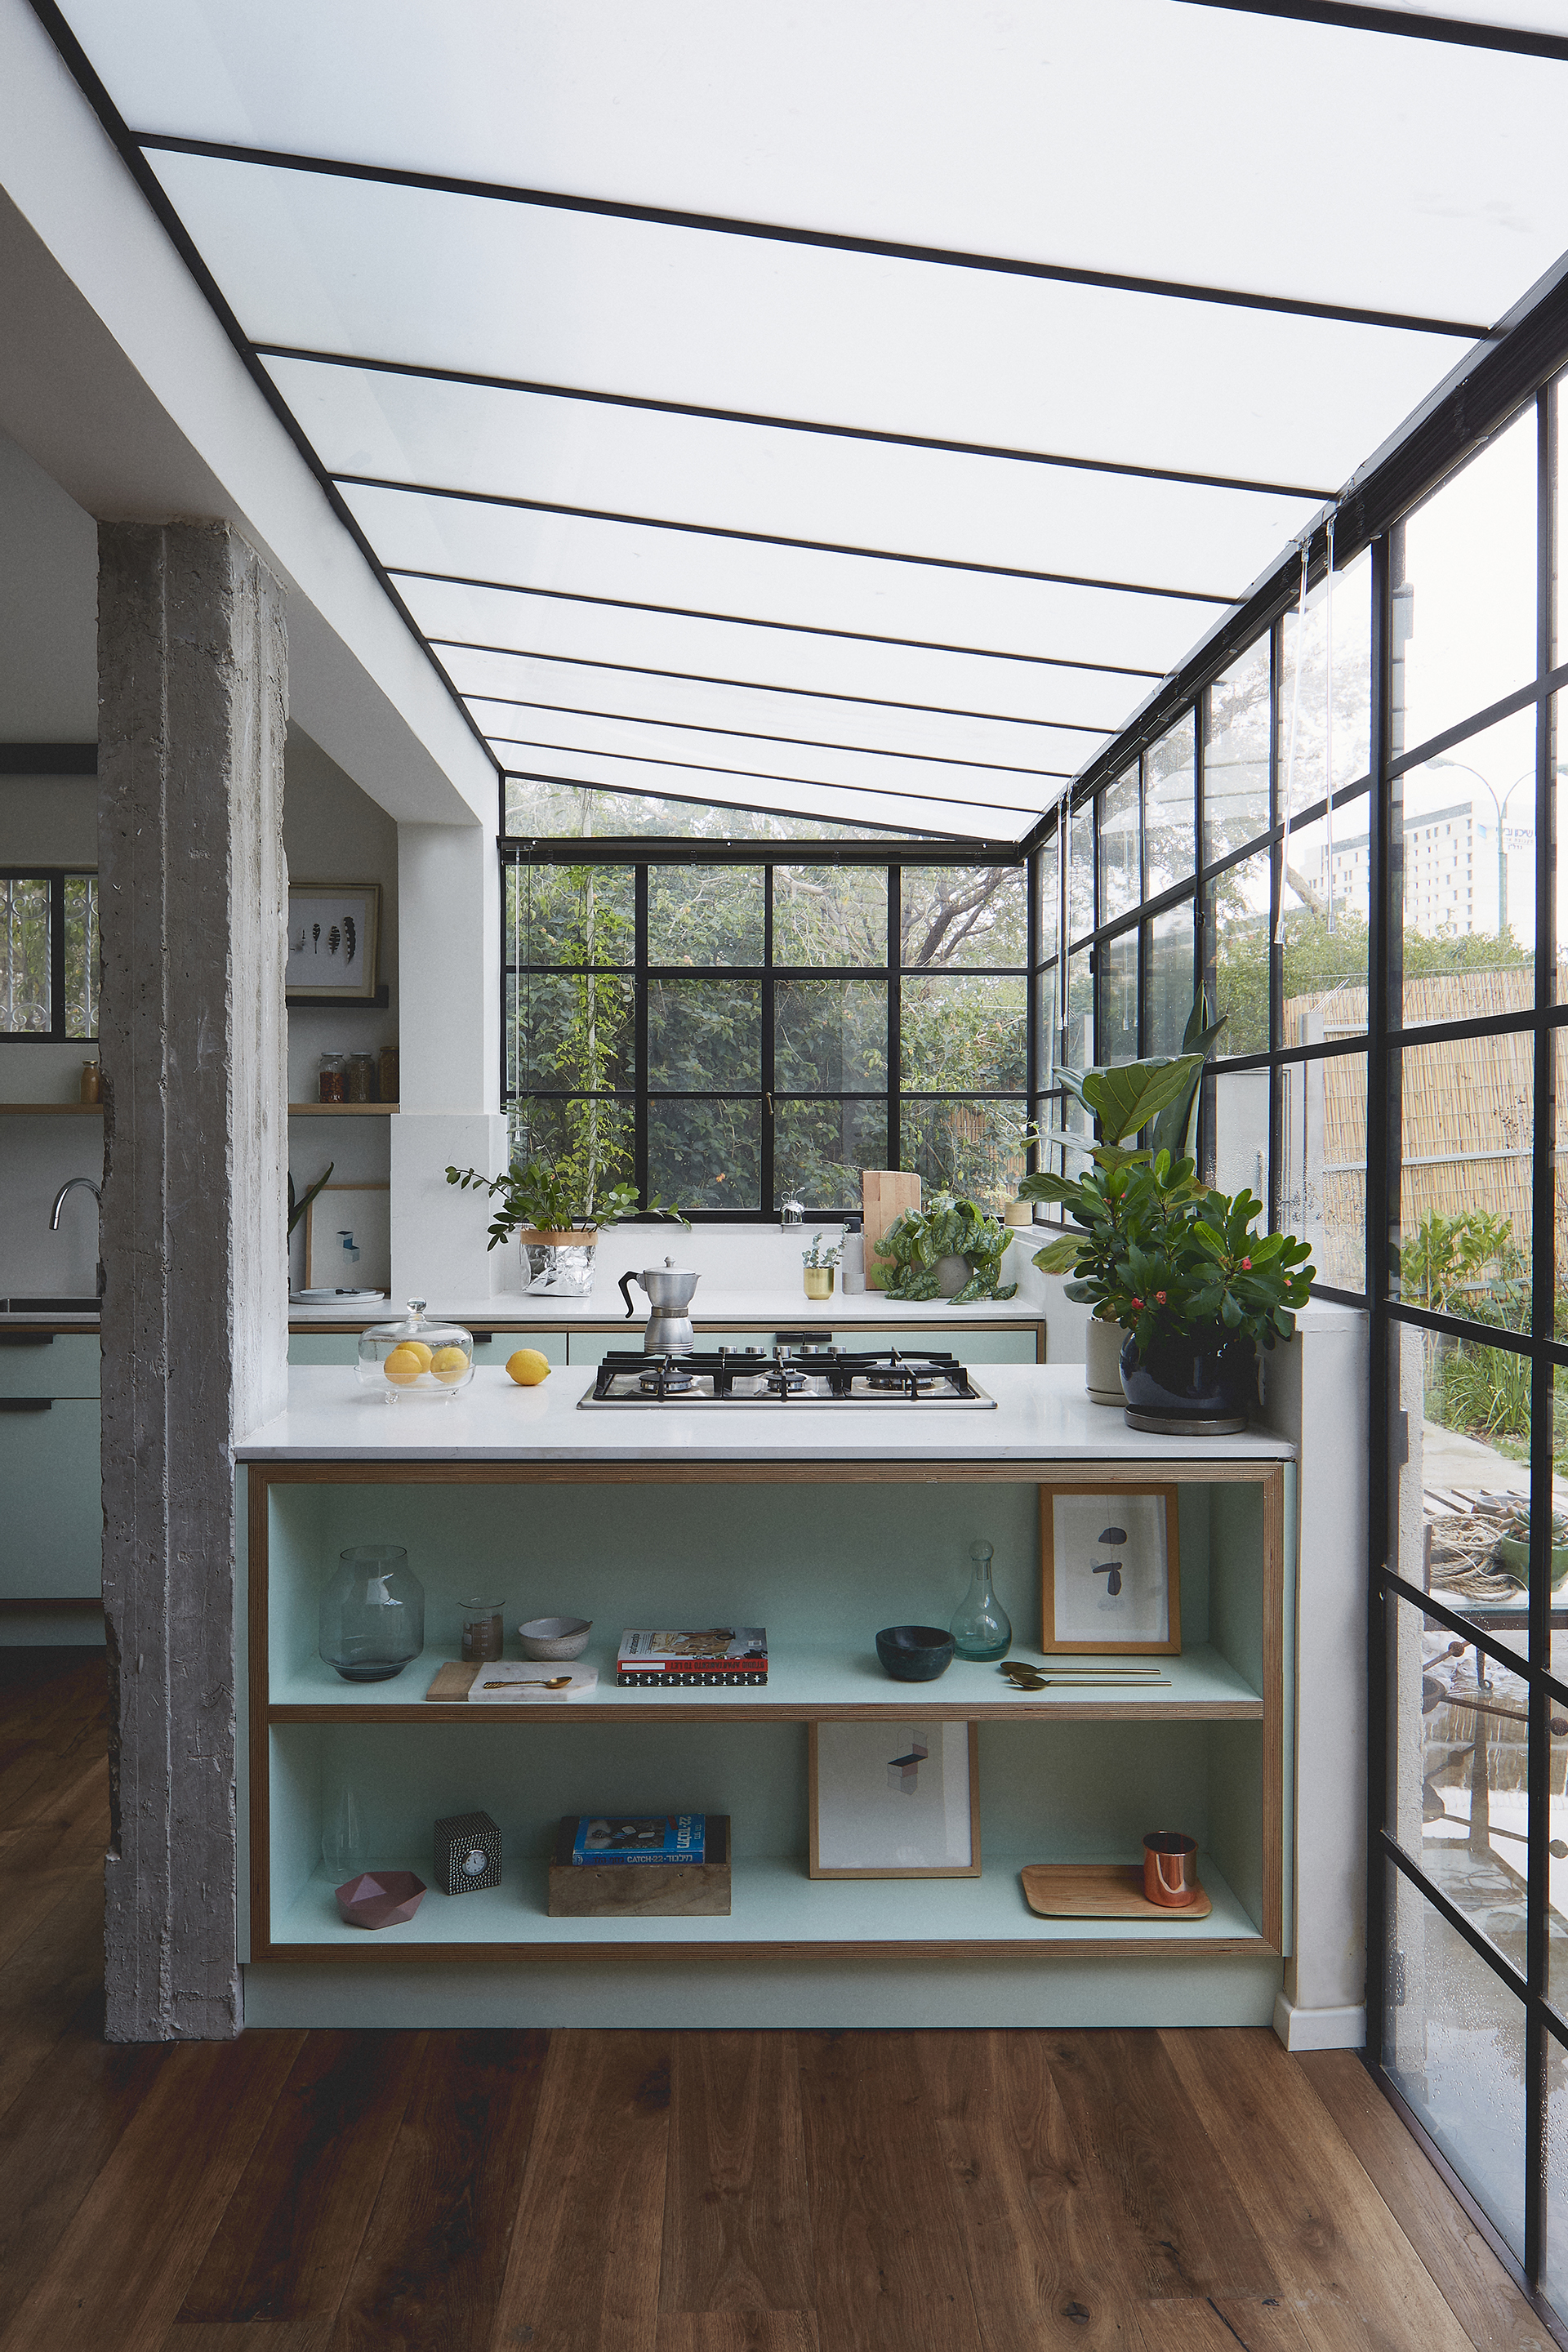 greenhouse-like kitchen in mint green